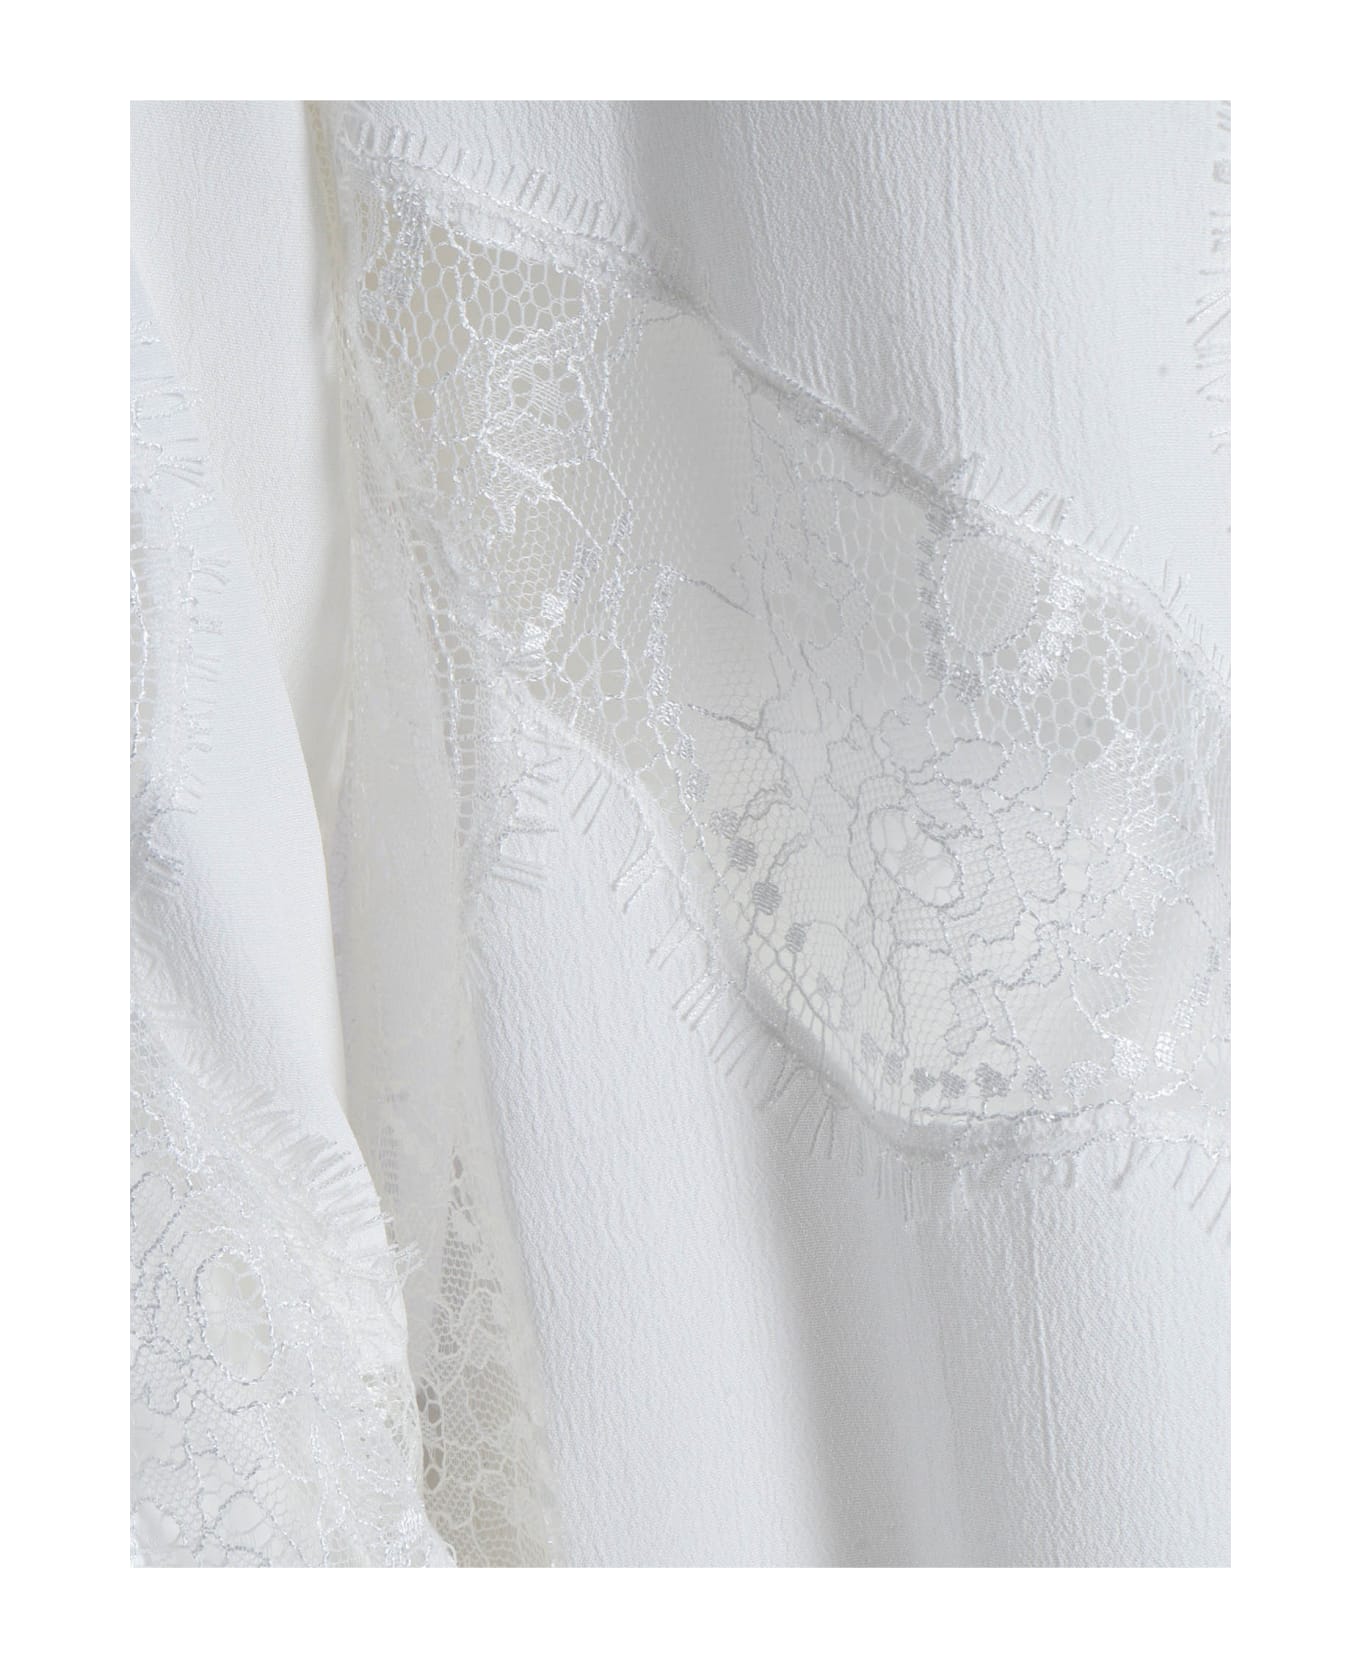 Parosh White Shirt With Lace - WHITE